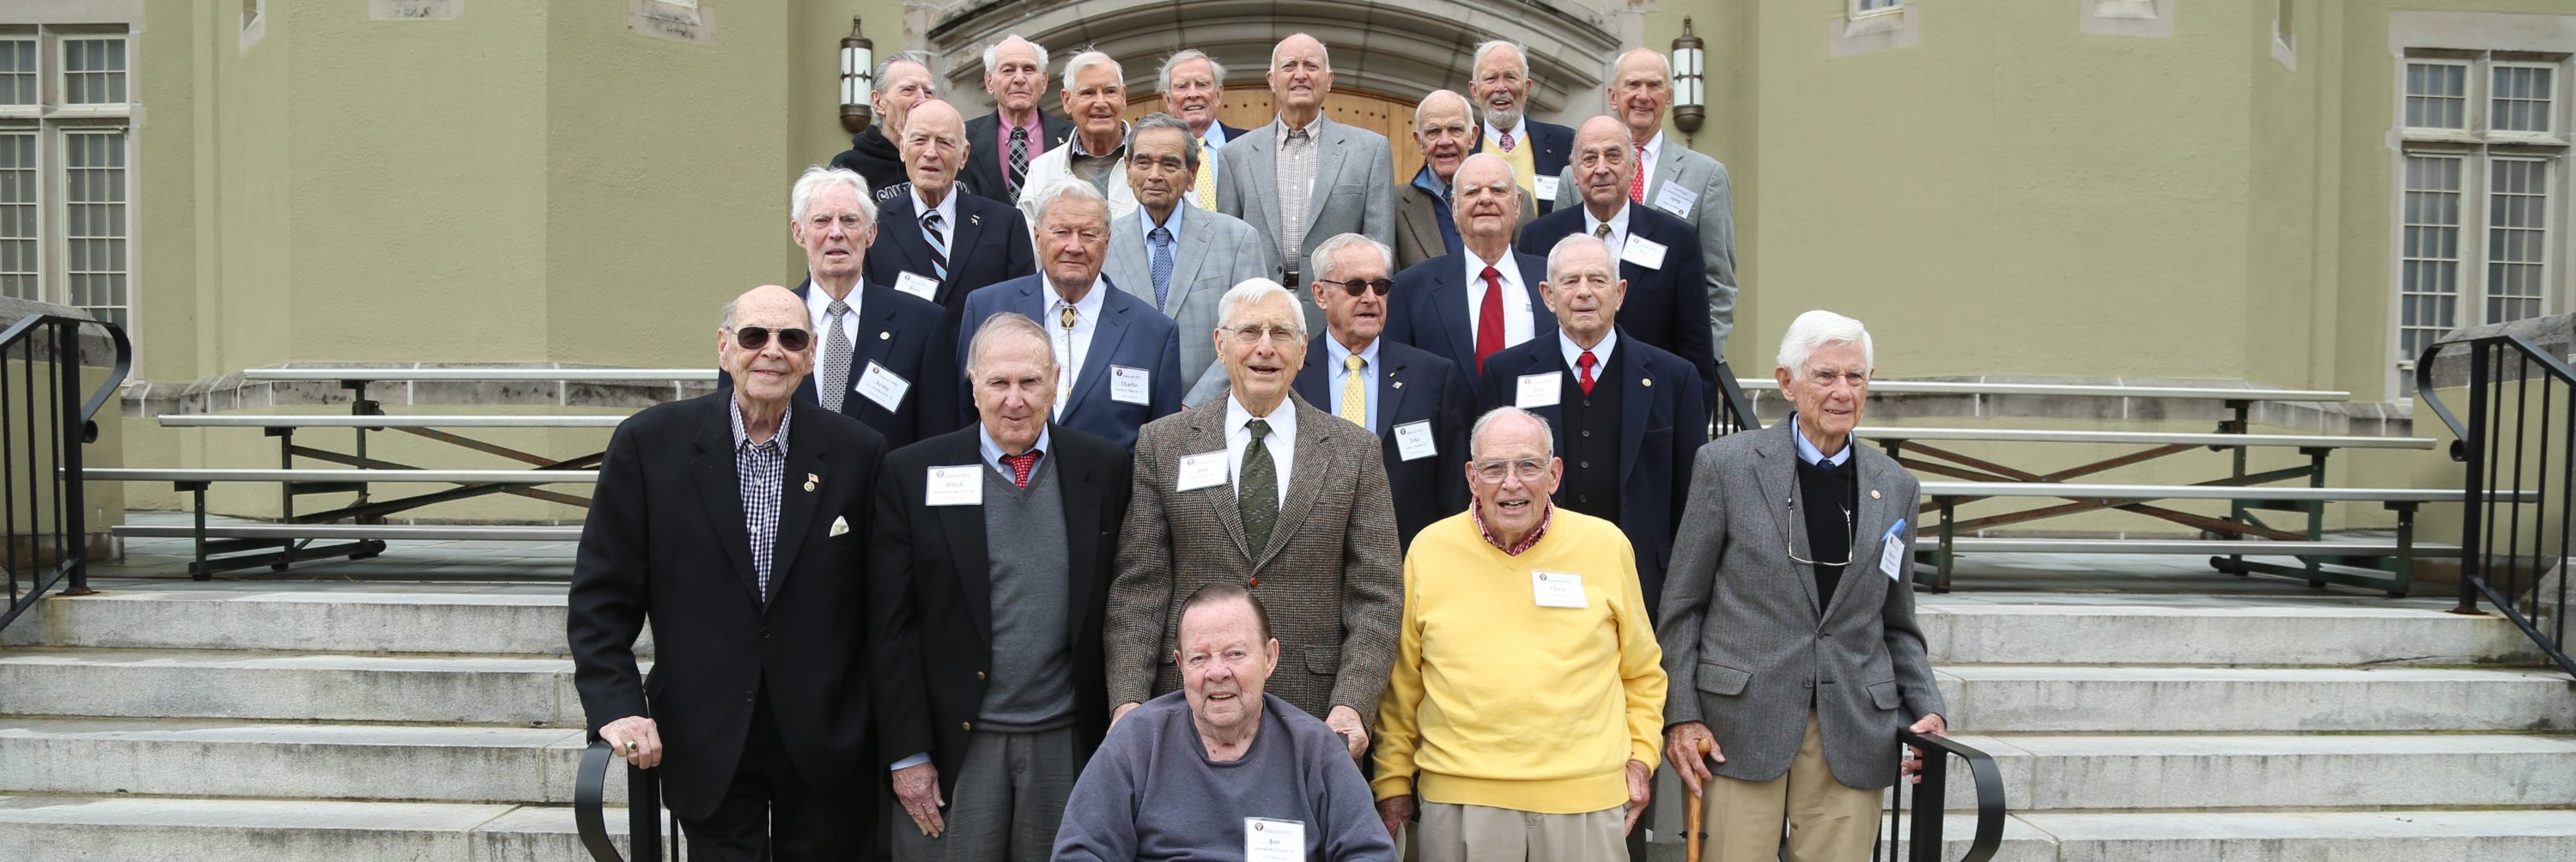 Class of 1952- 70th Reunion